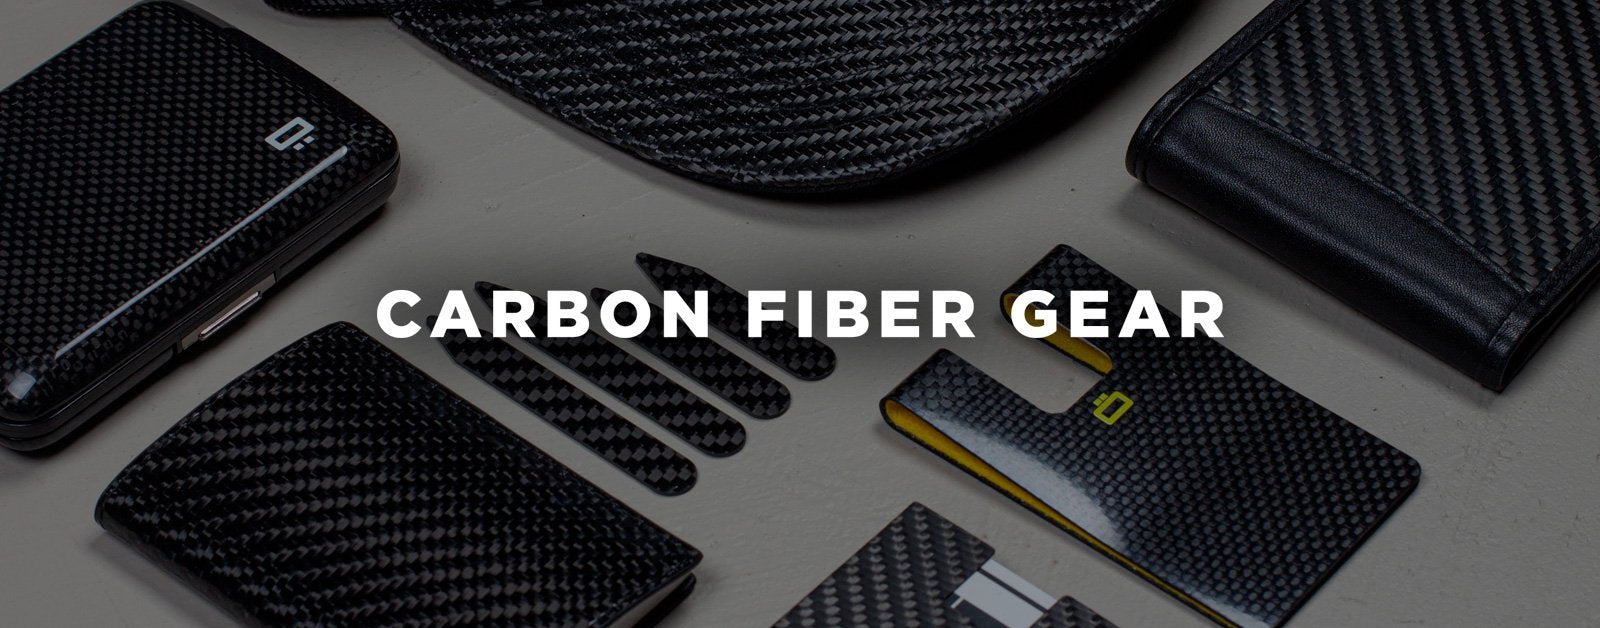 partner mistet hjerte melodisk Carbon Fiber Gear - Accessories, Sheets, Gifts, and More